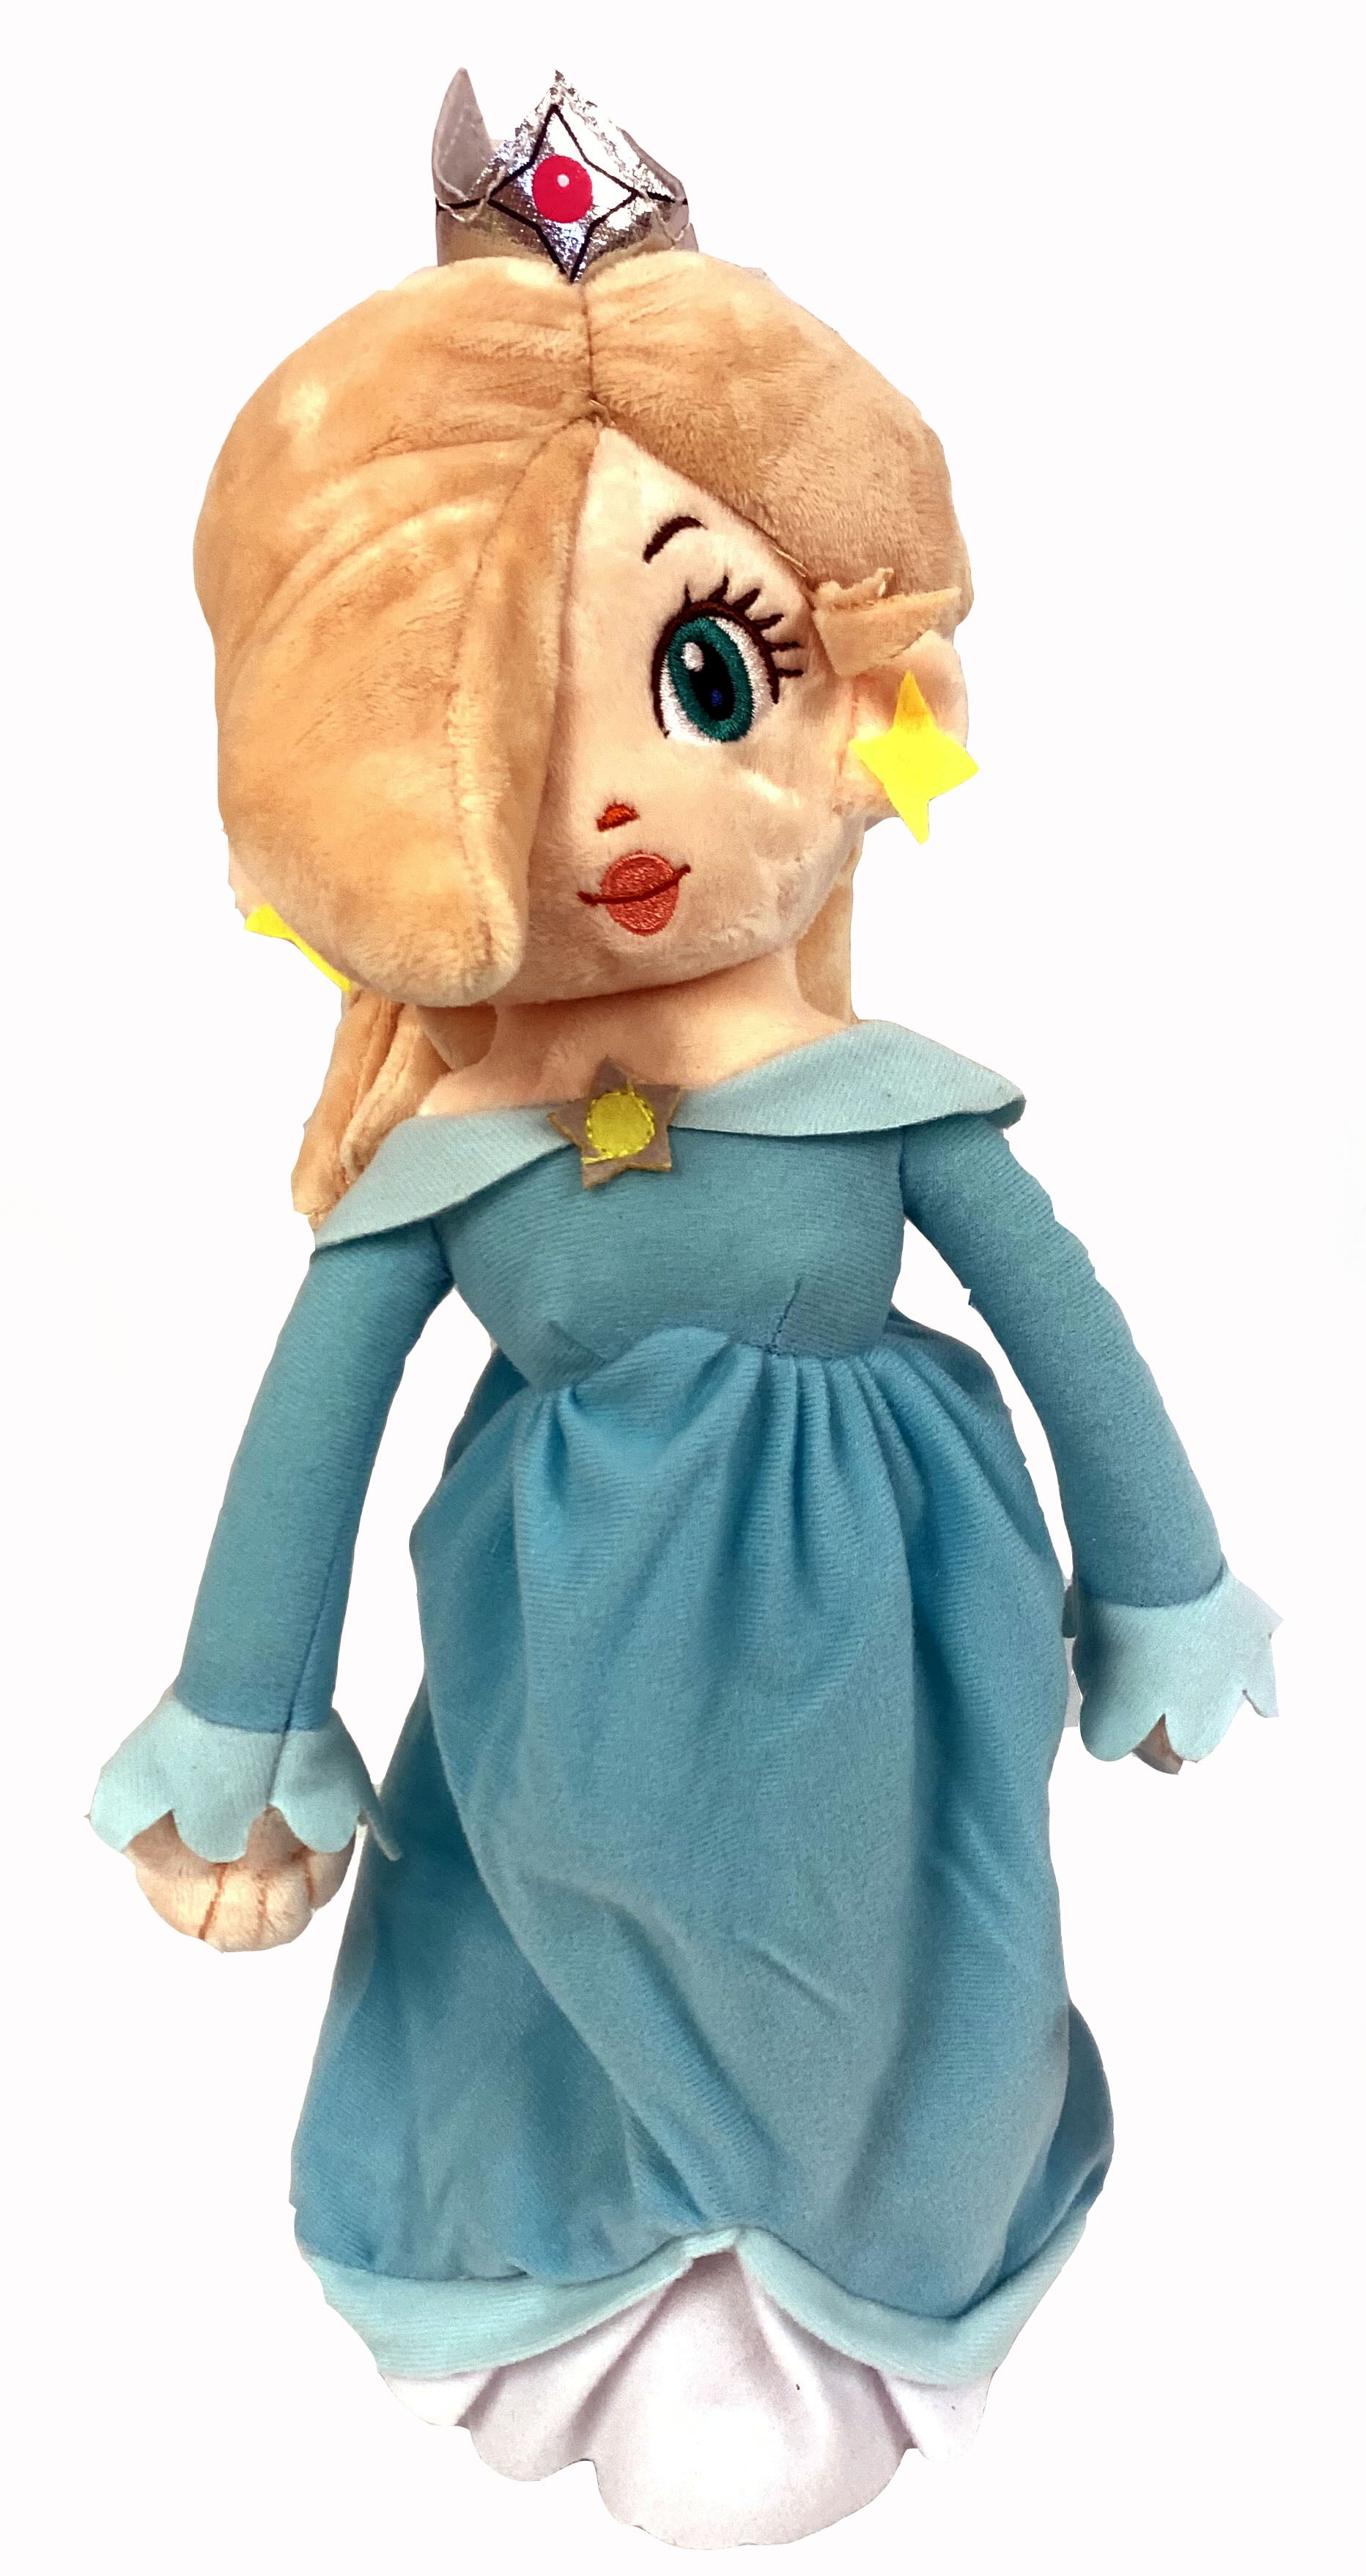 12" Princess Hand Puppet Plush Doll Toy